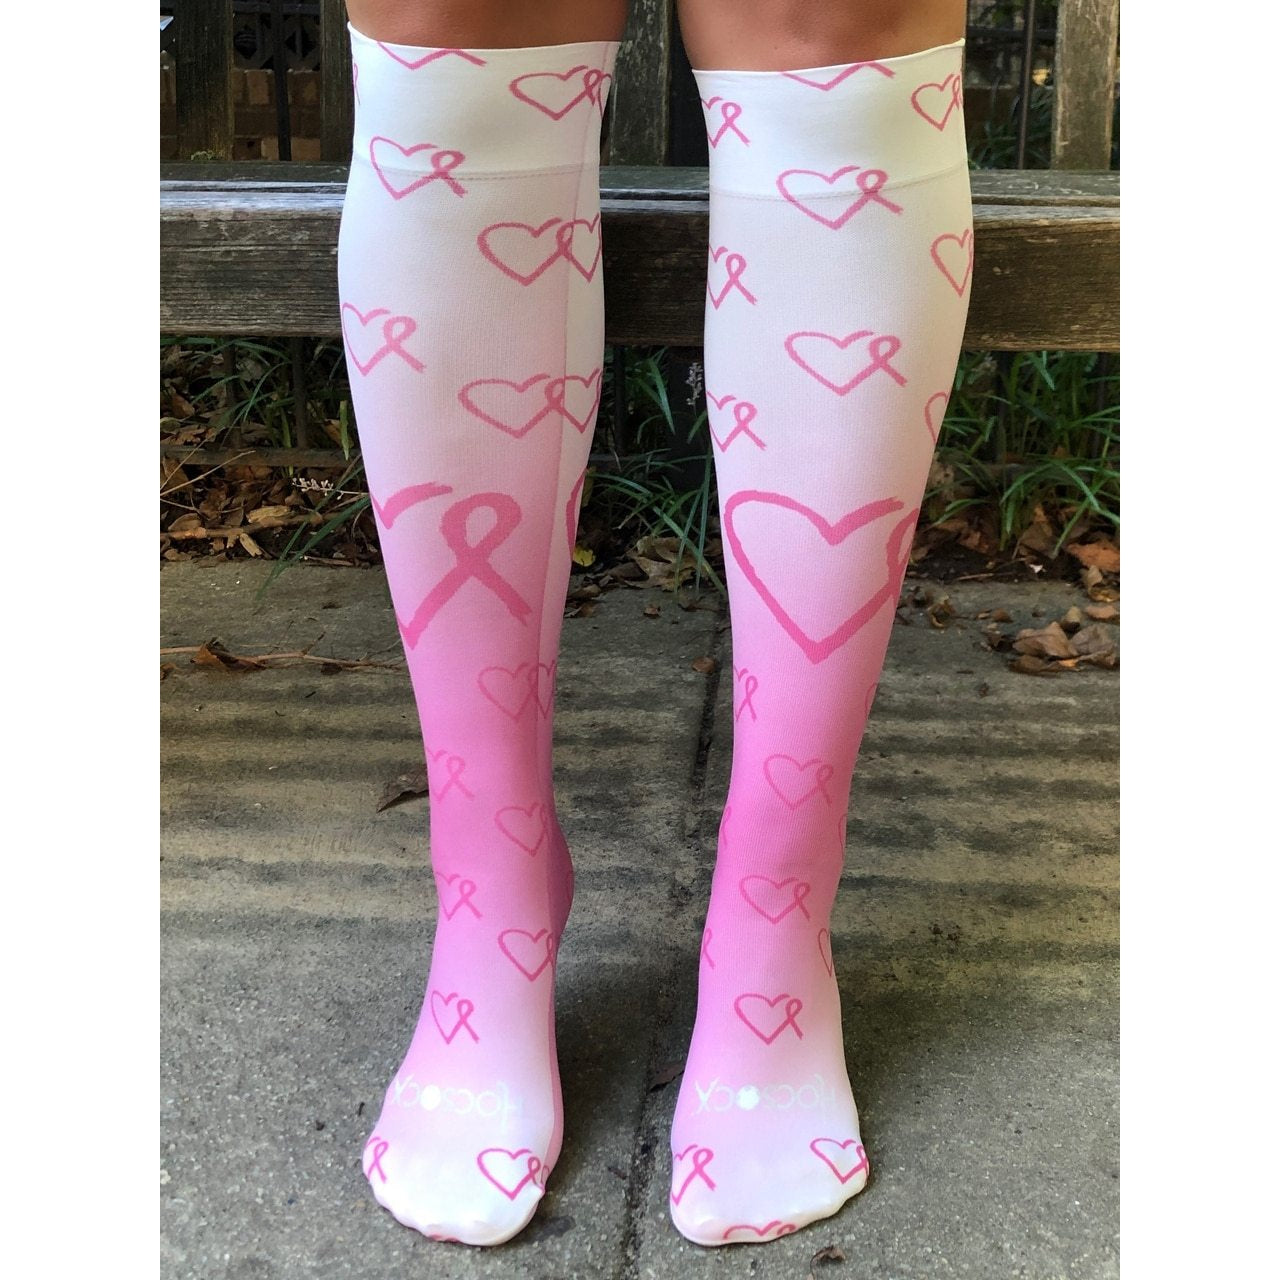 Hocsocx Pink Ribbon Socks